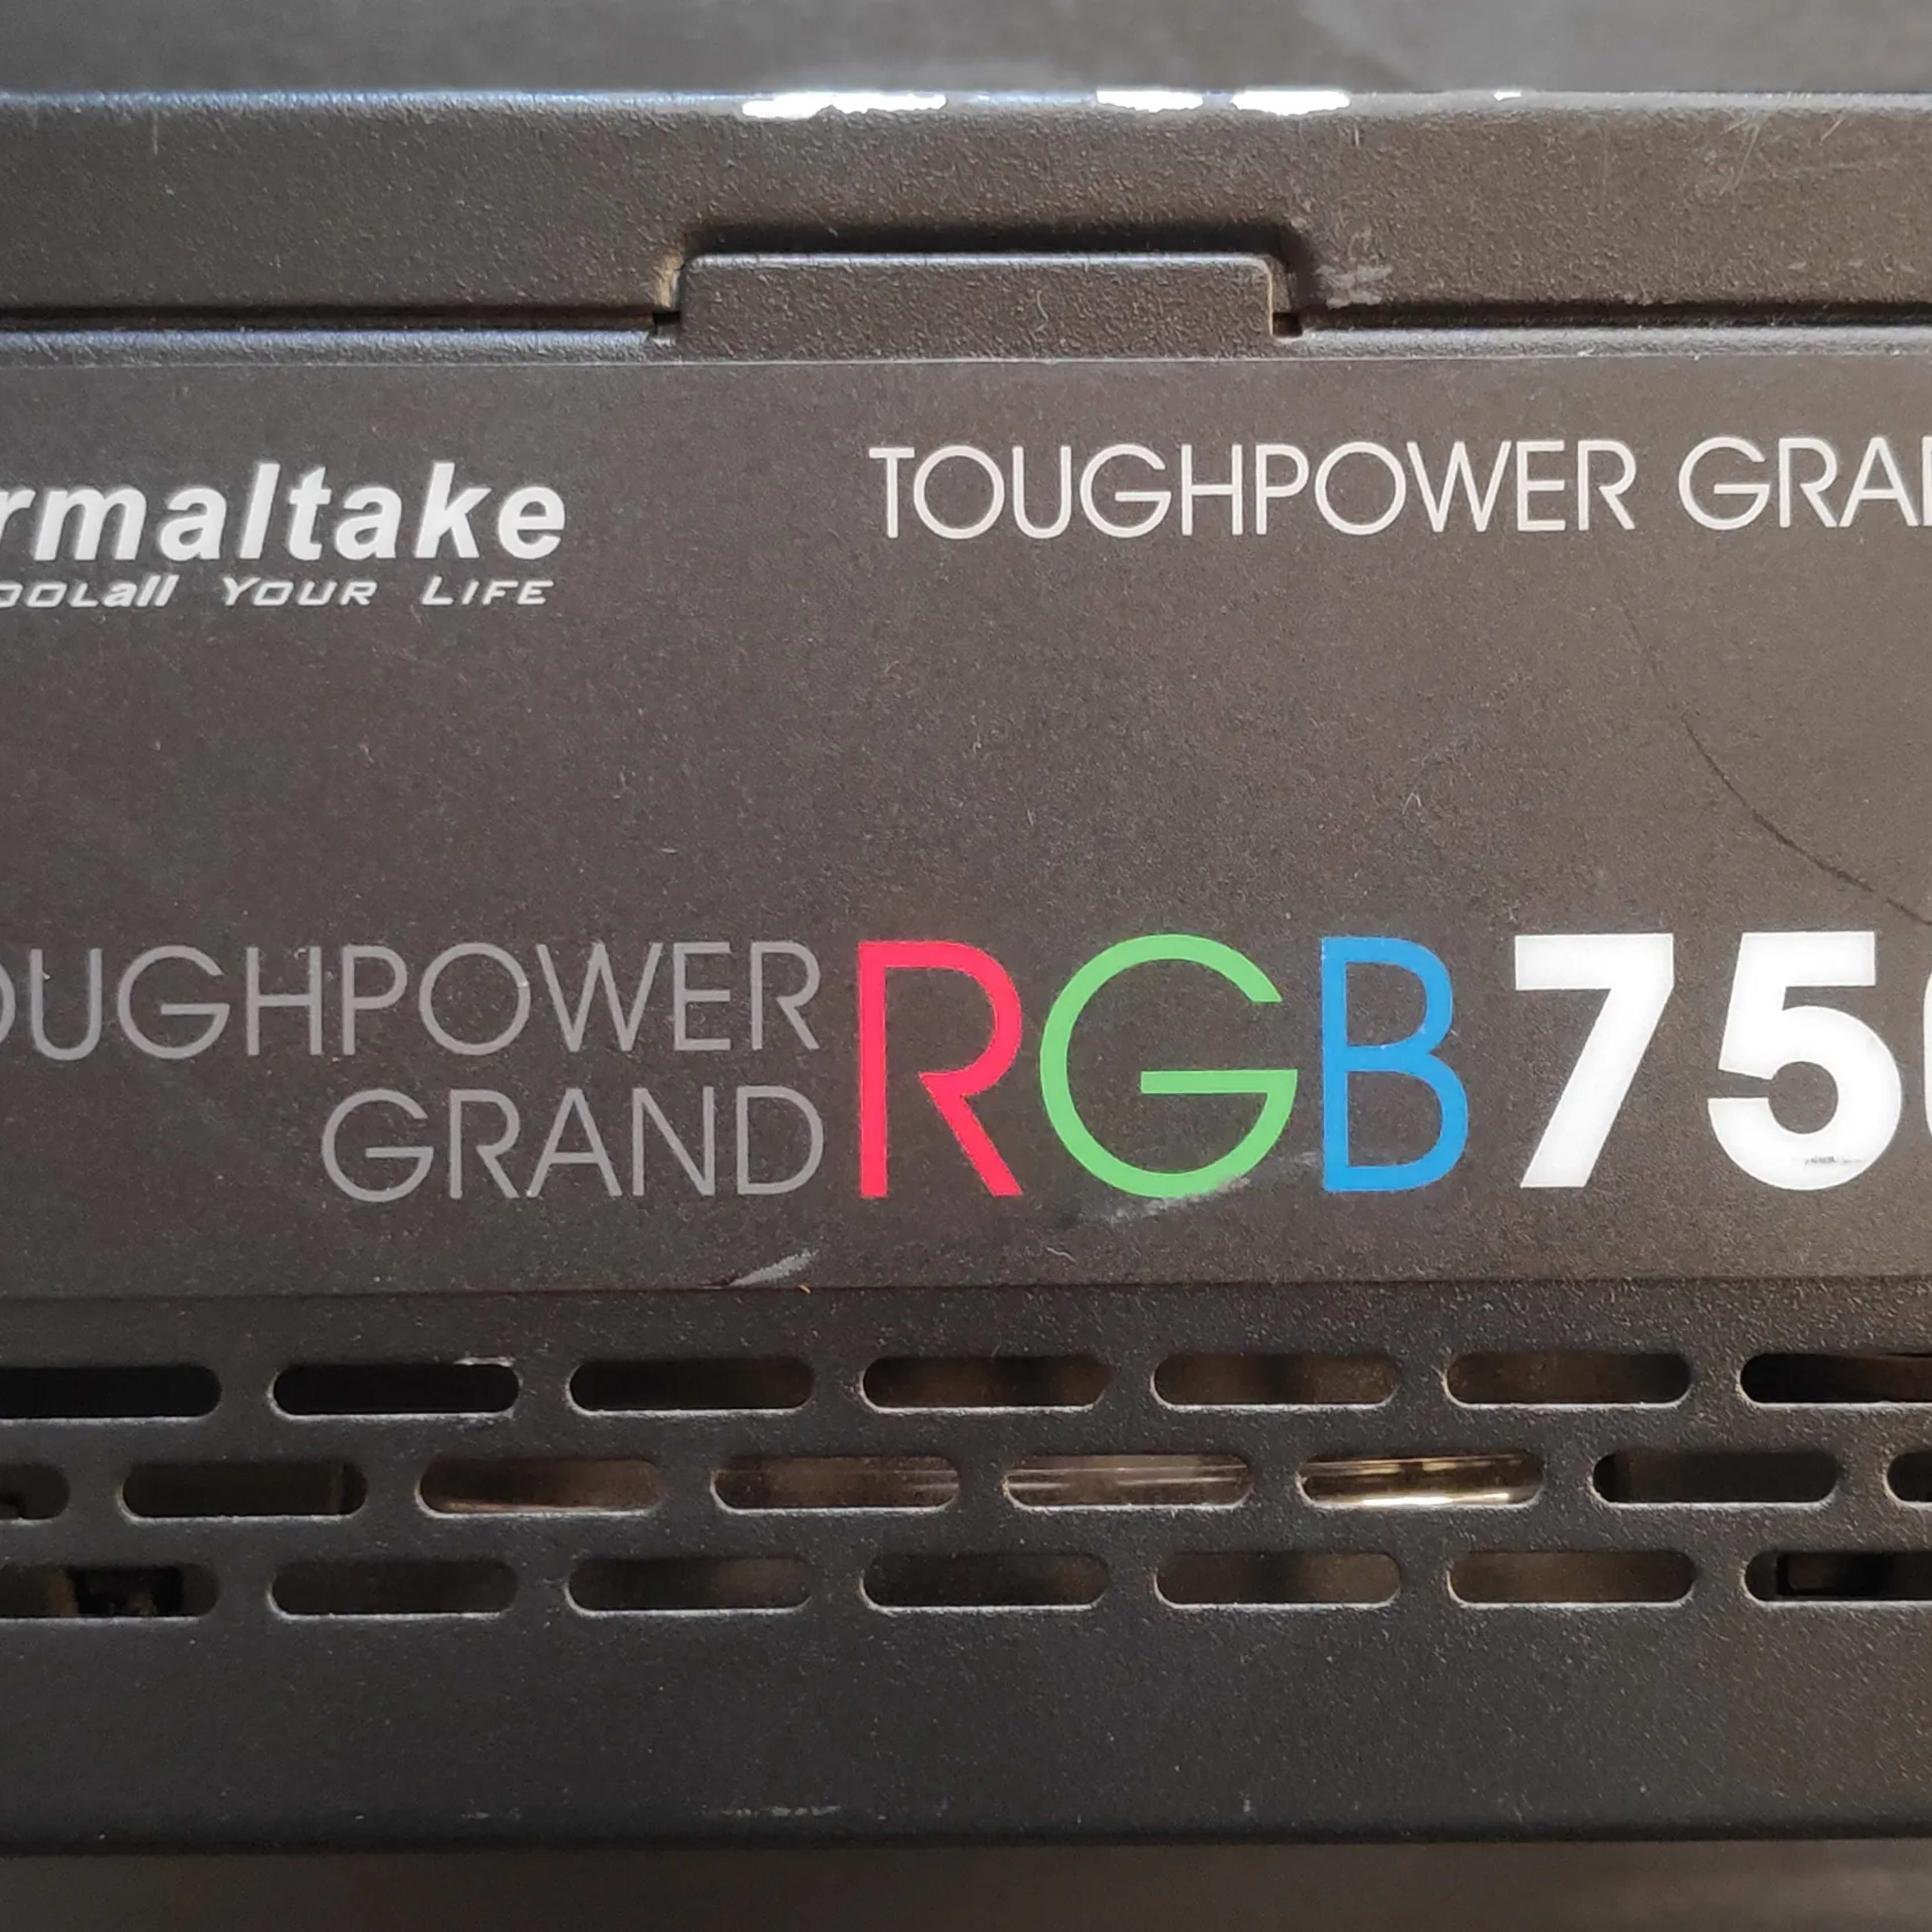 Toughpower Grand RGB 850W Gold Full Modular